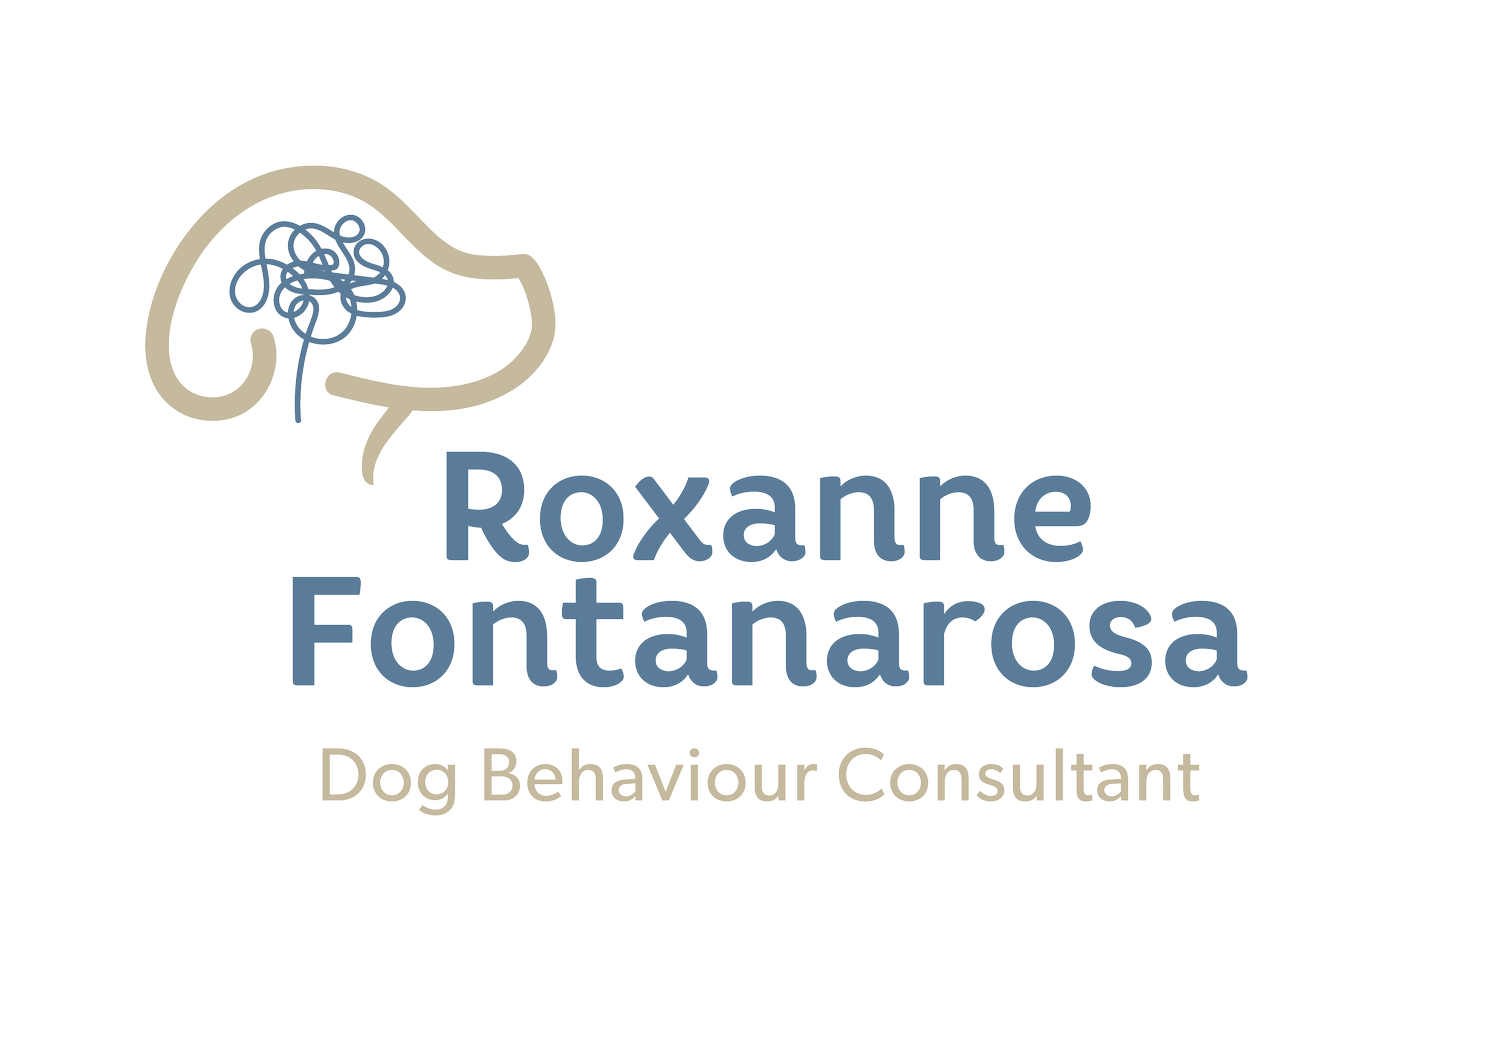 Dog Training and Behaviour